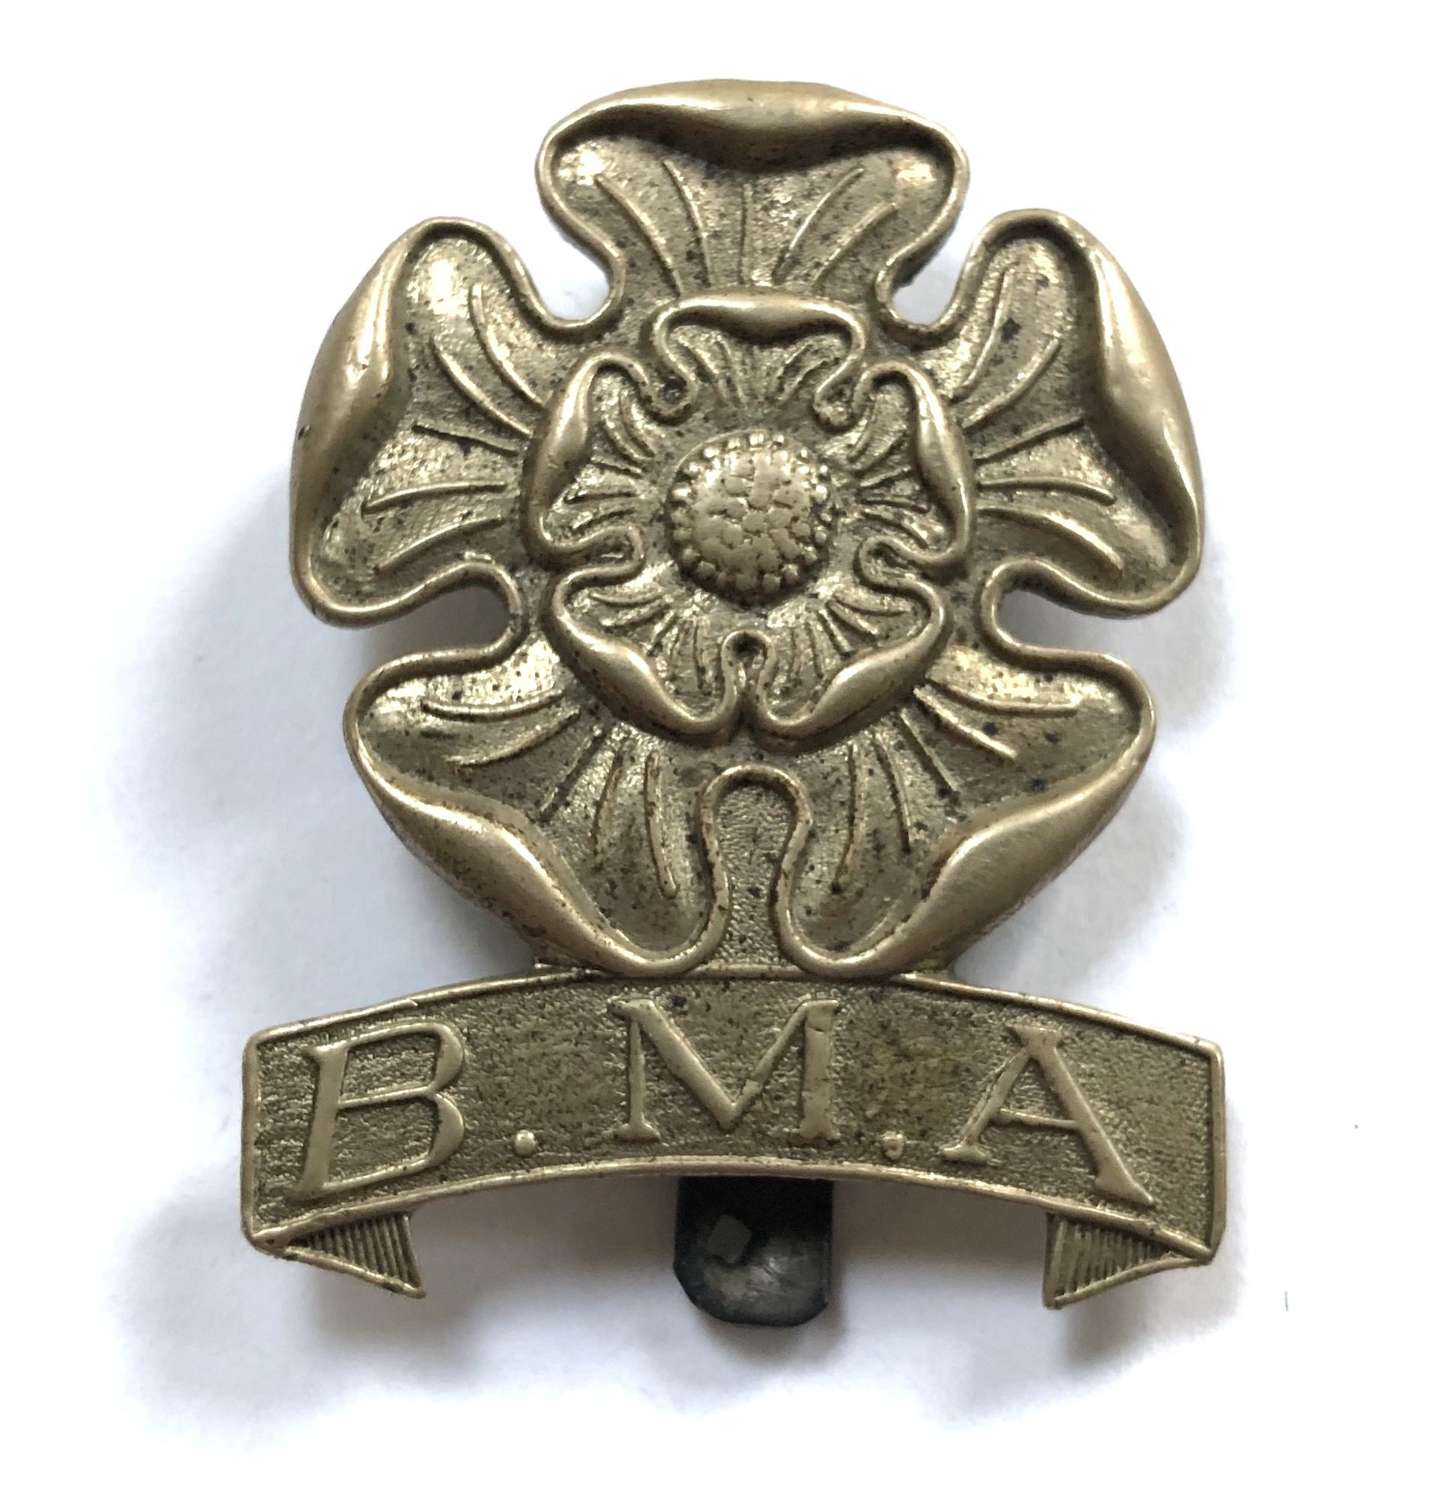 British Military Administration WW2 cap badge circa 1941-47.